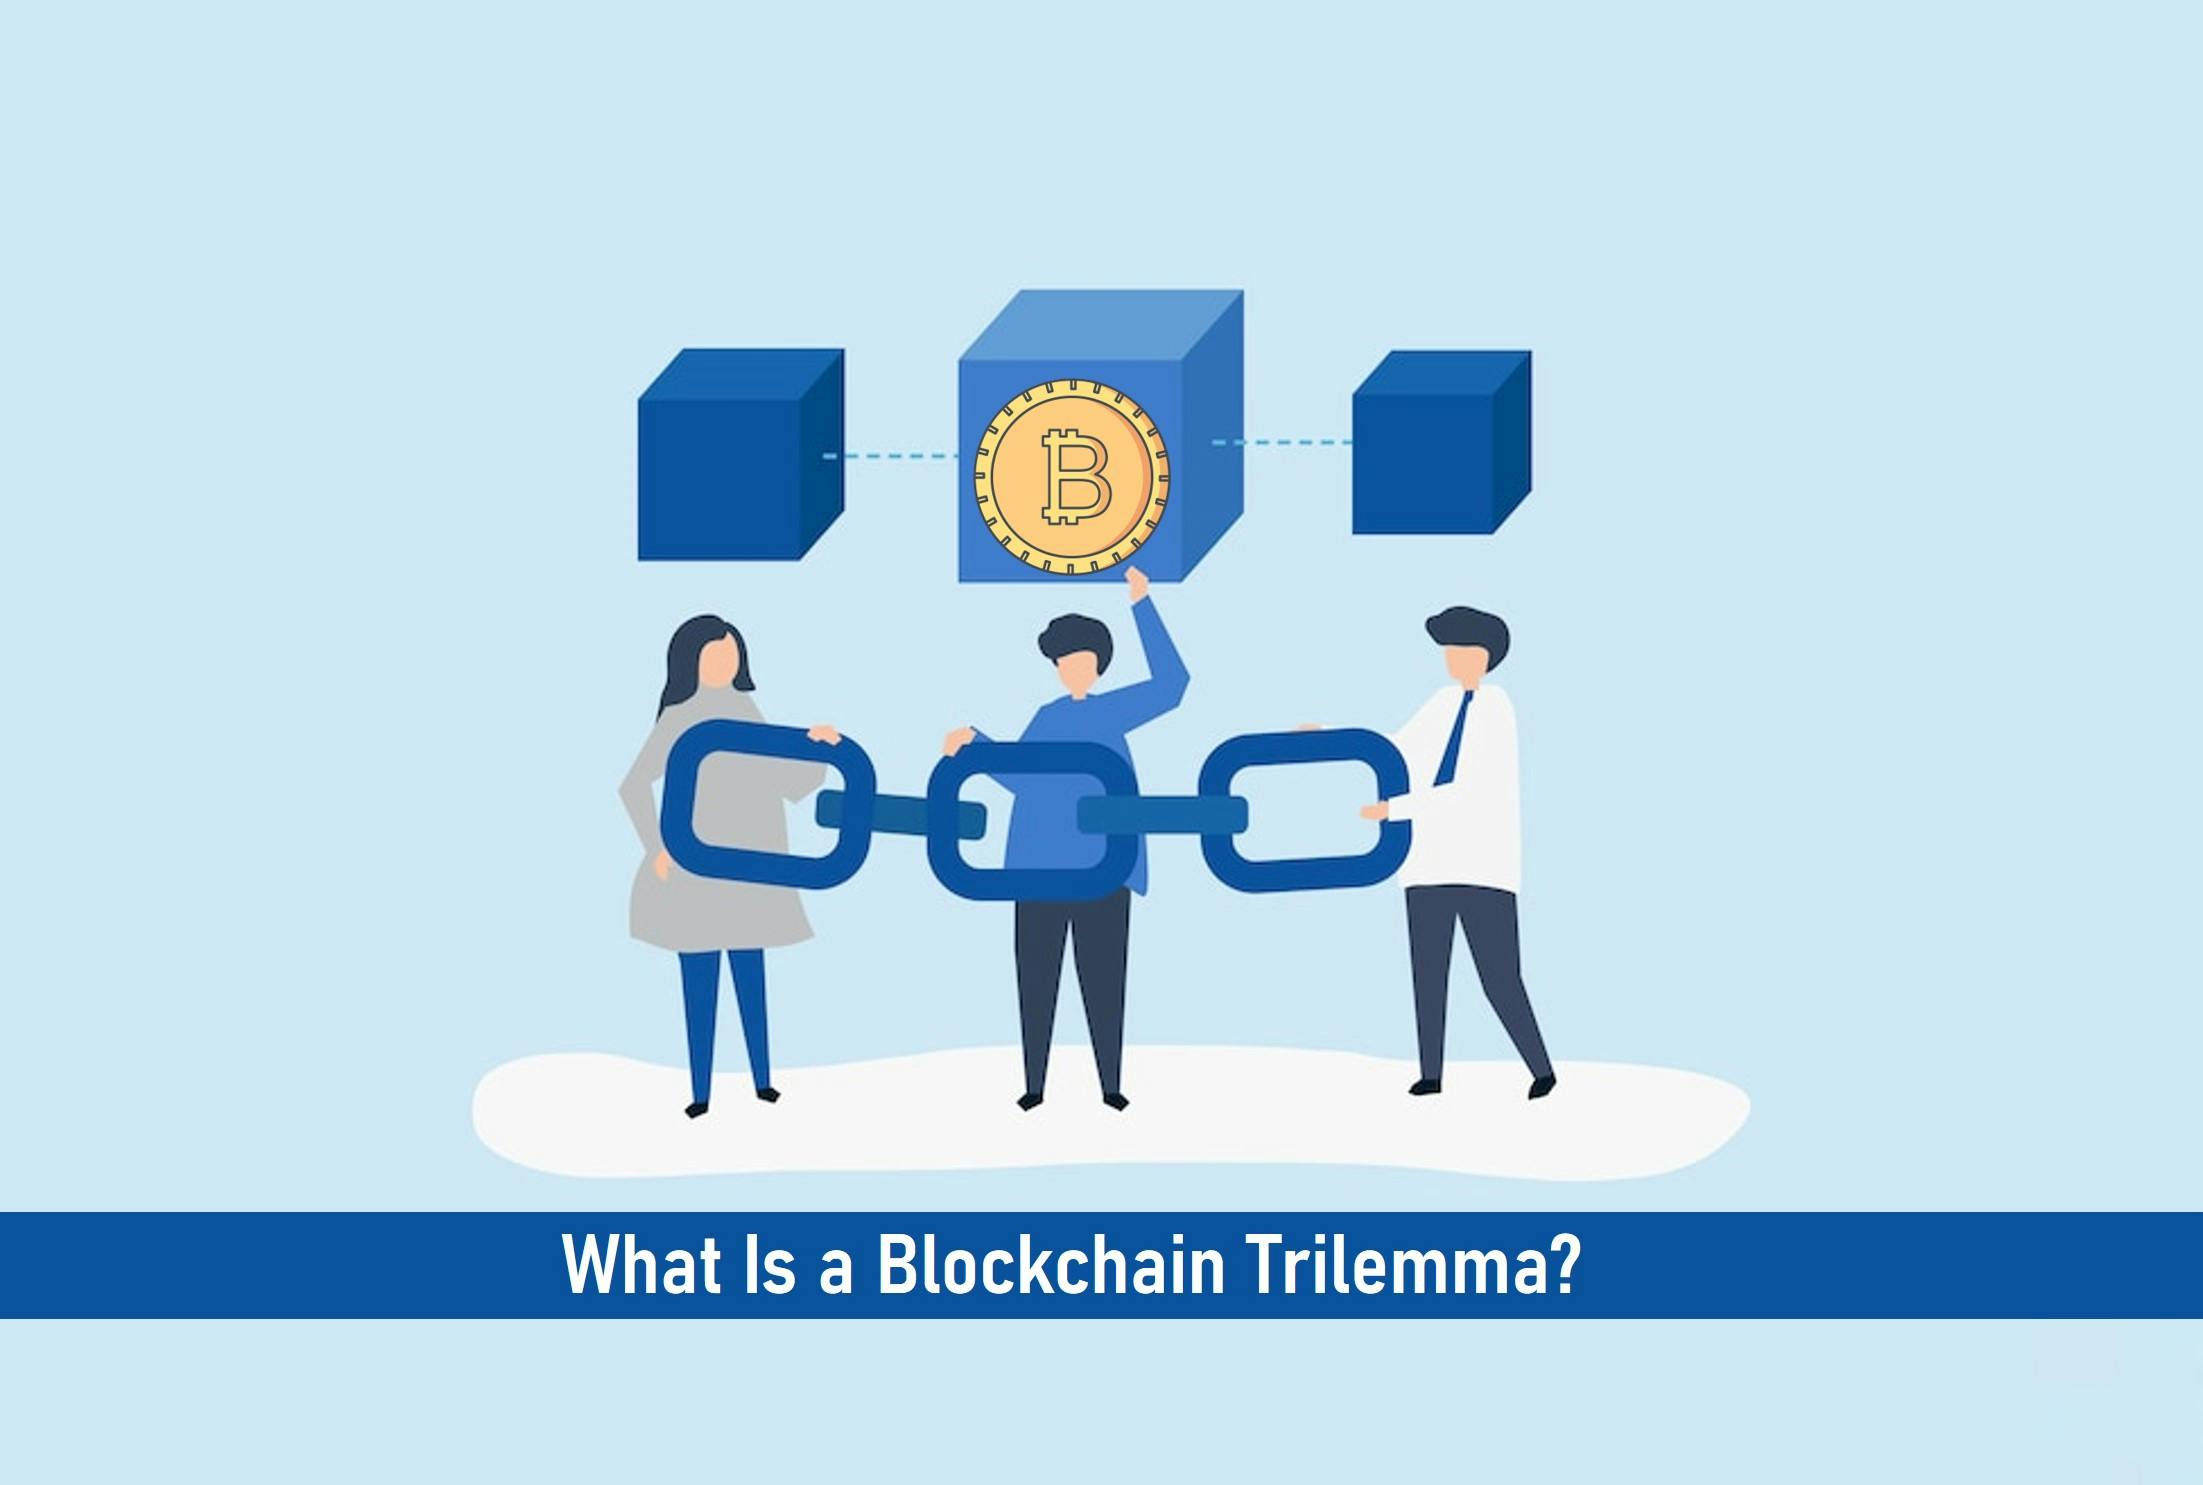 What is a Blockchain Trilemma?